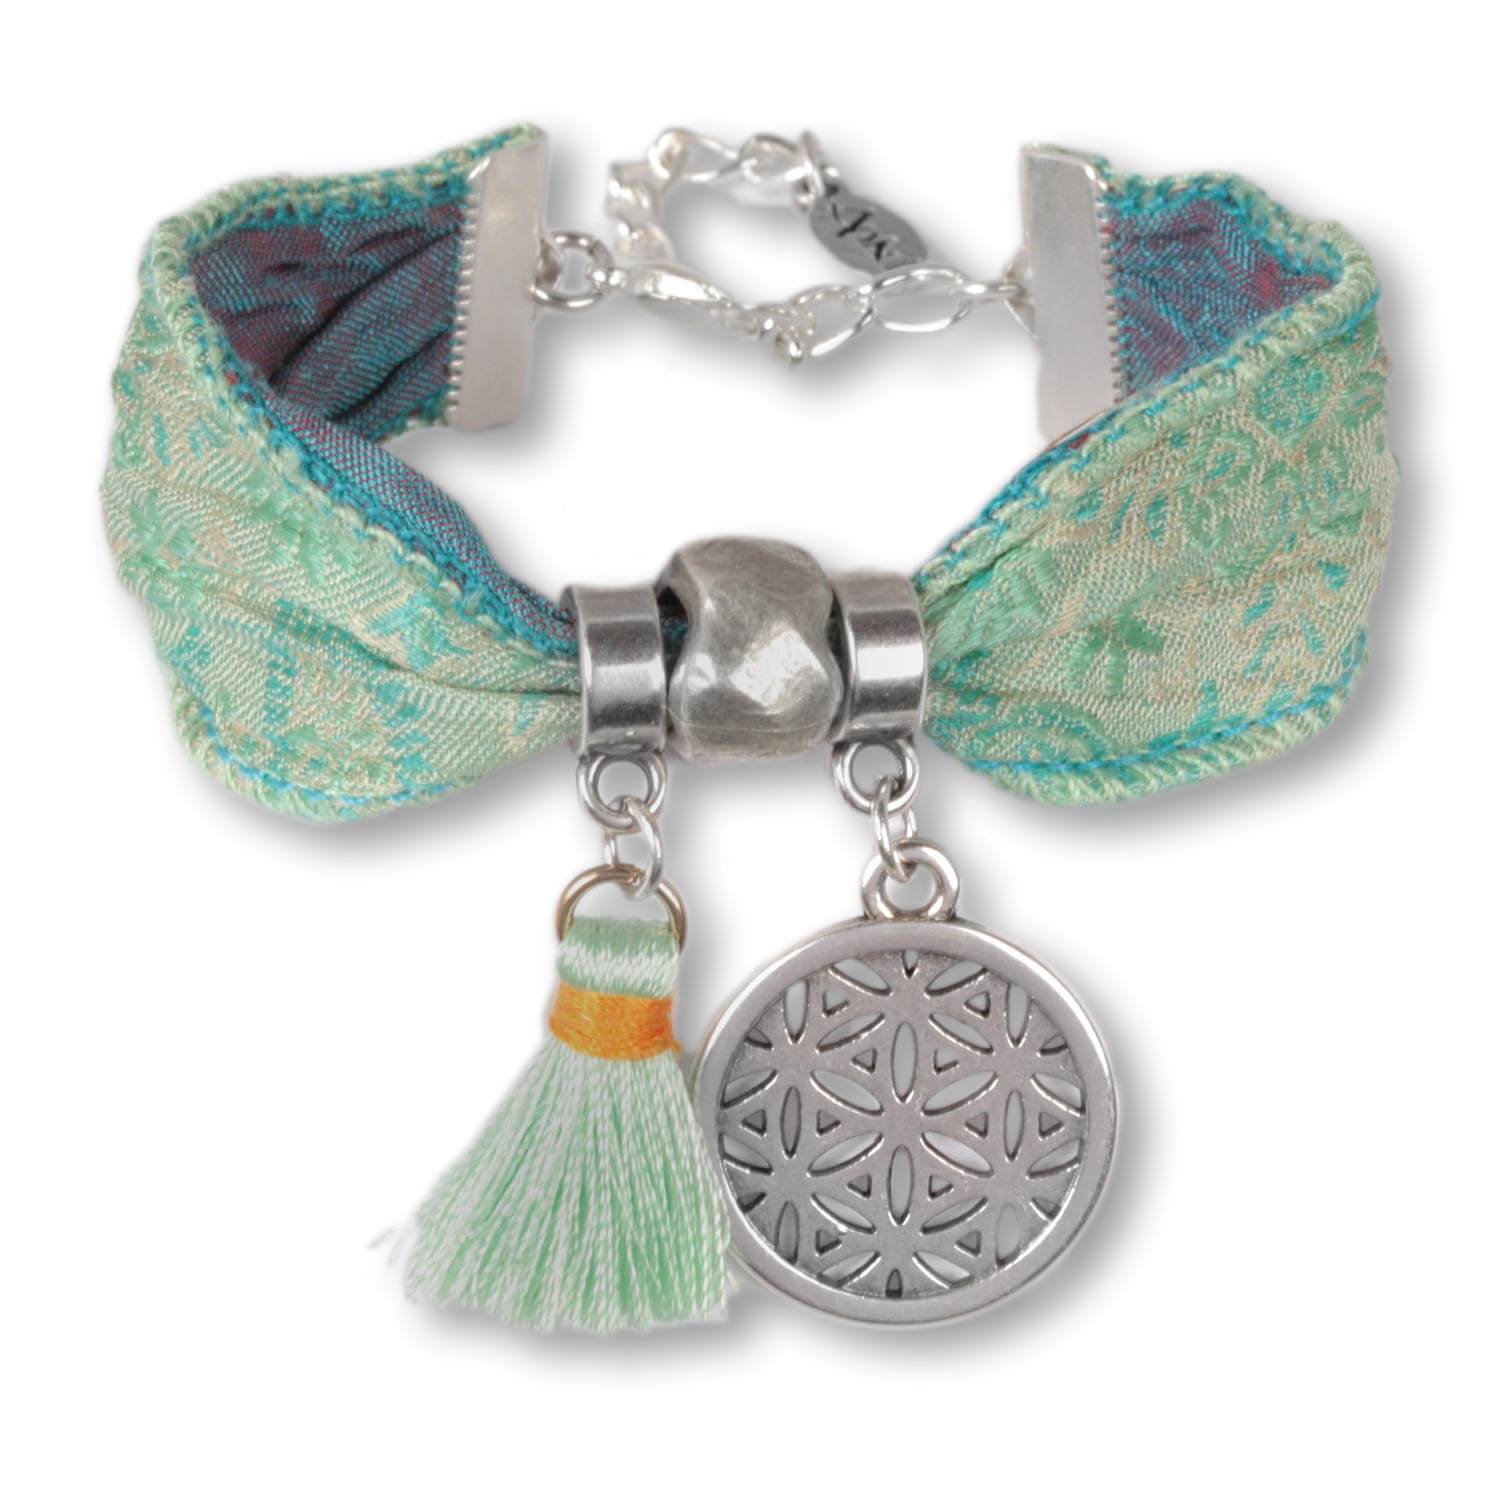 Mint Flower of Life - Yogini Bracelet with Carabiner | Inspiring Jewellery for Yoga Fans